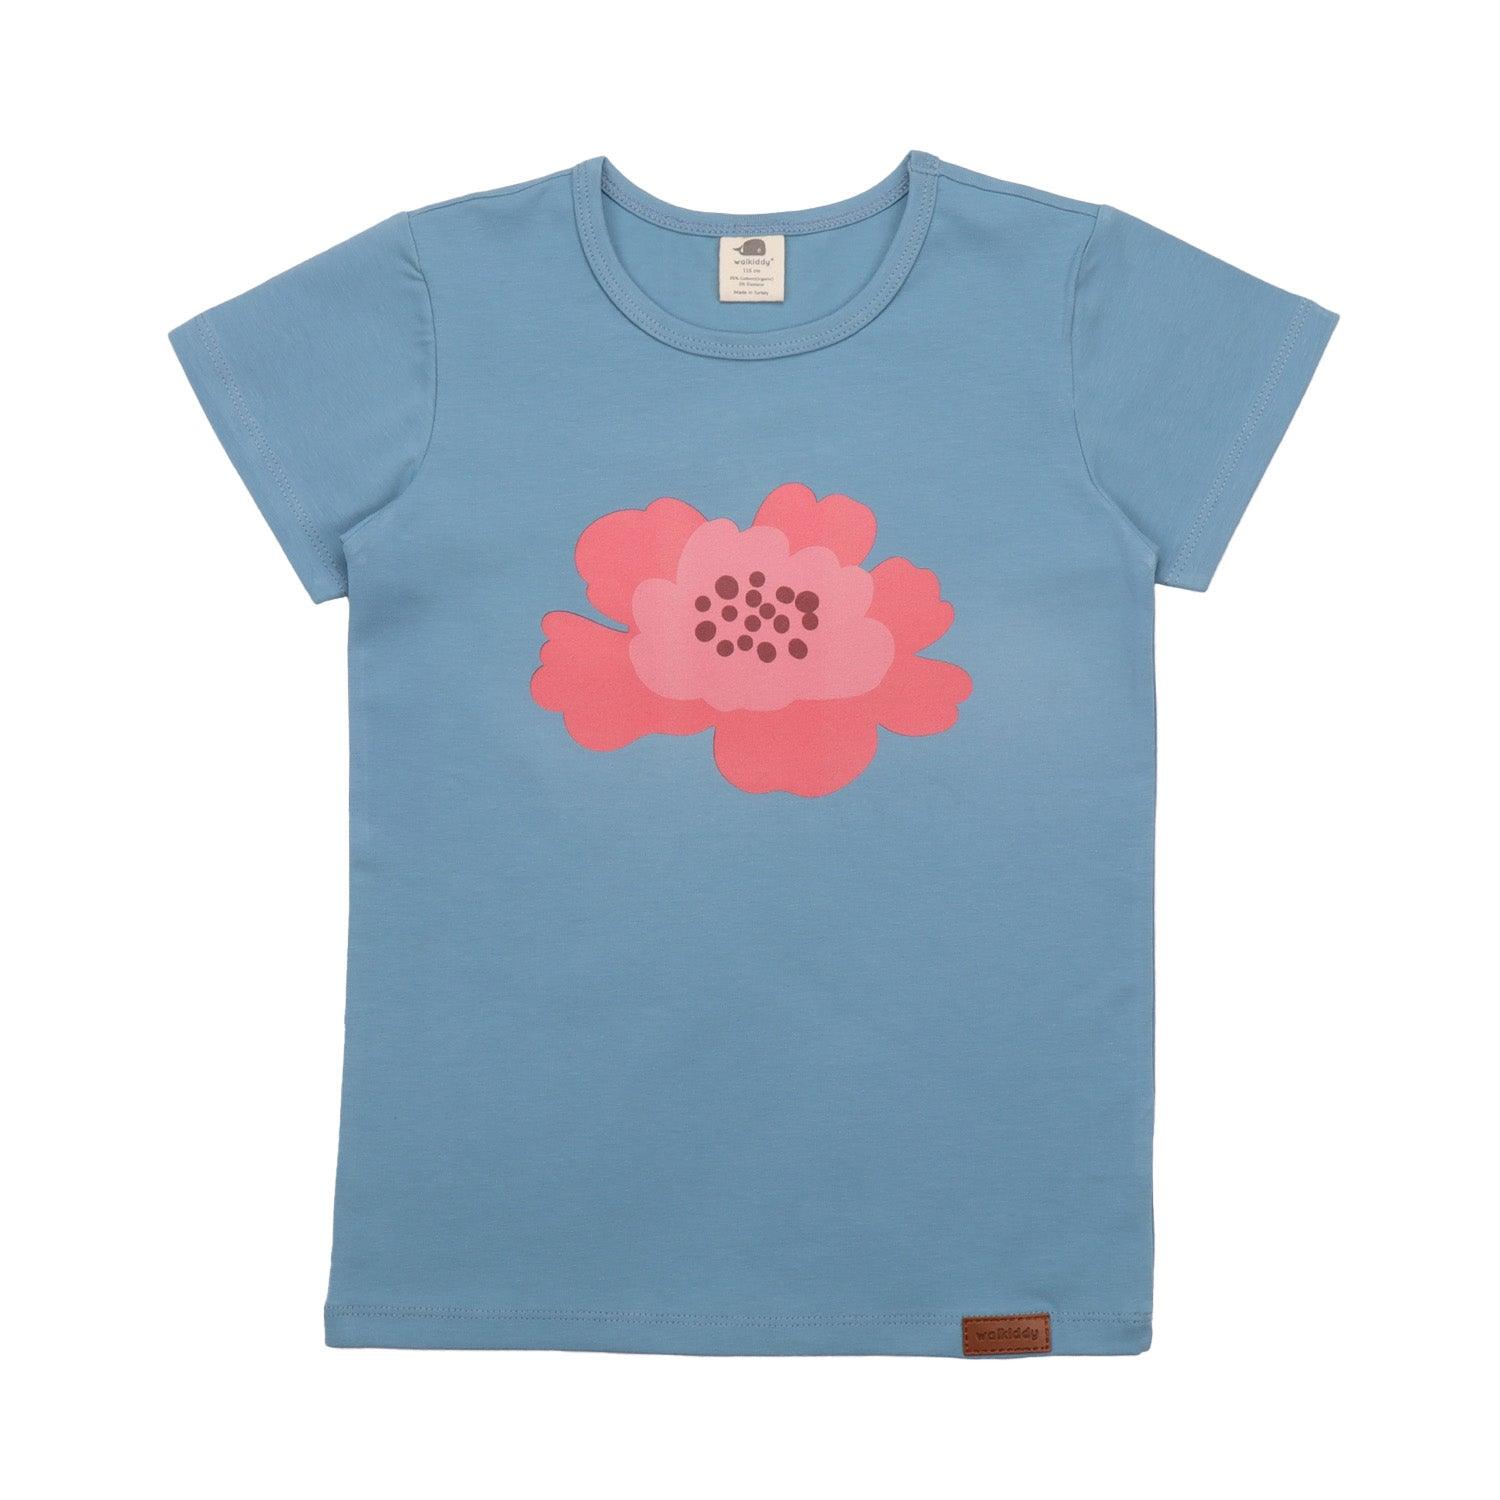 Walkiddy - Mini Flowers - T-Shirt - Makimo - Smart Kids